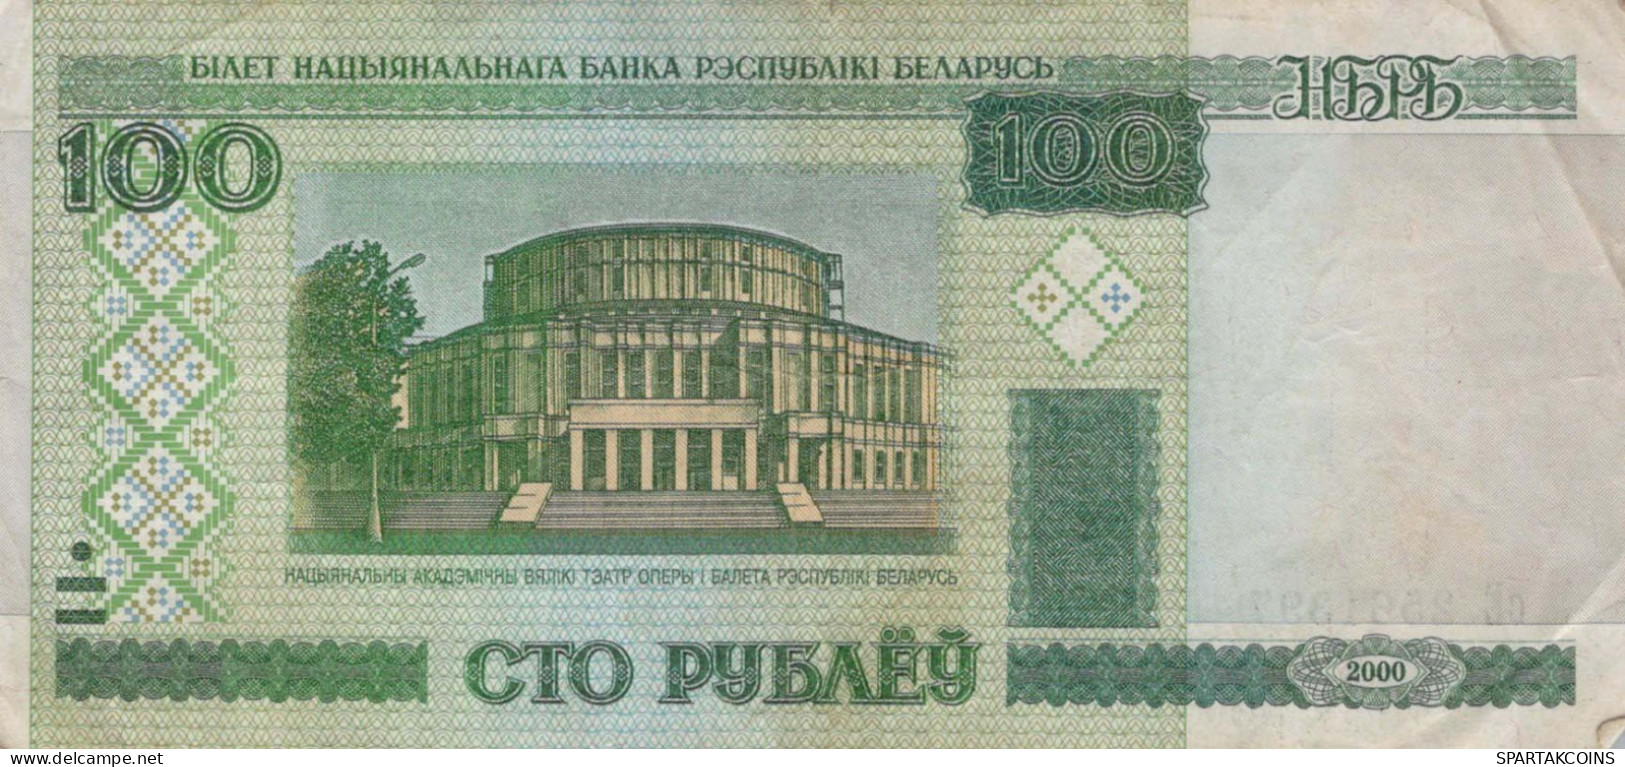 100 RUBLES 2000 BELARUS Papiergeld Banknote #PK608 - [11] Emissions Locales